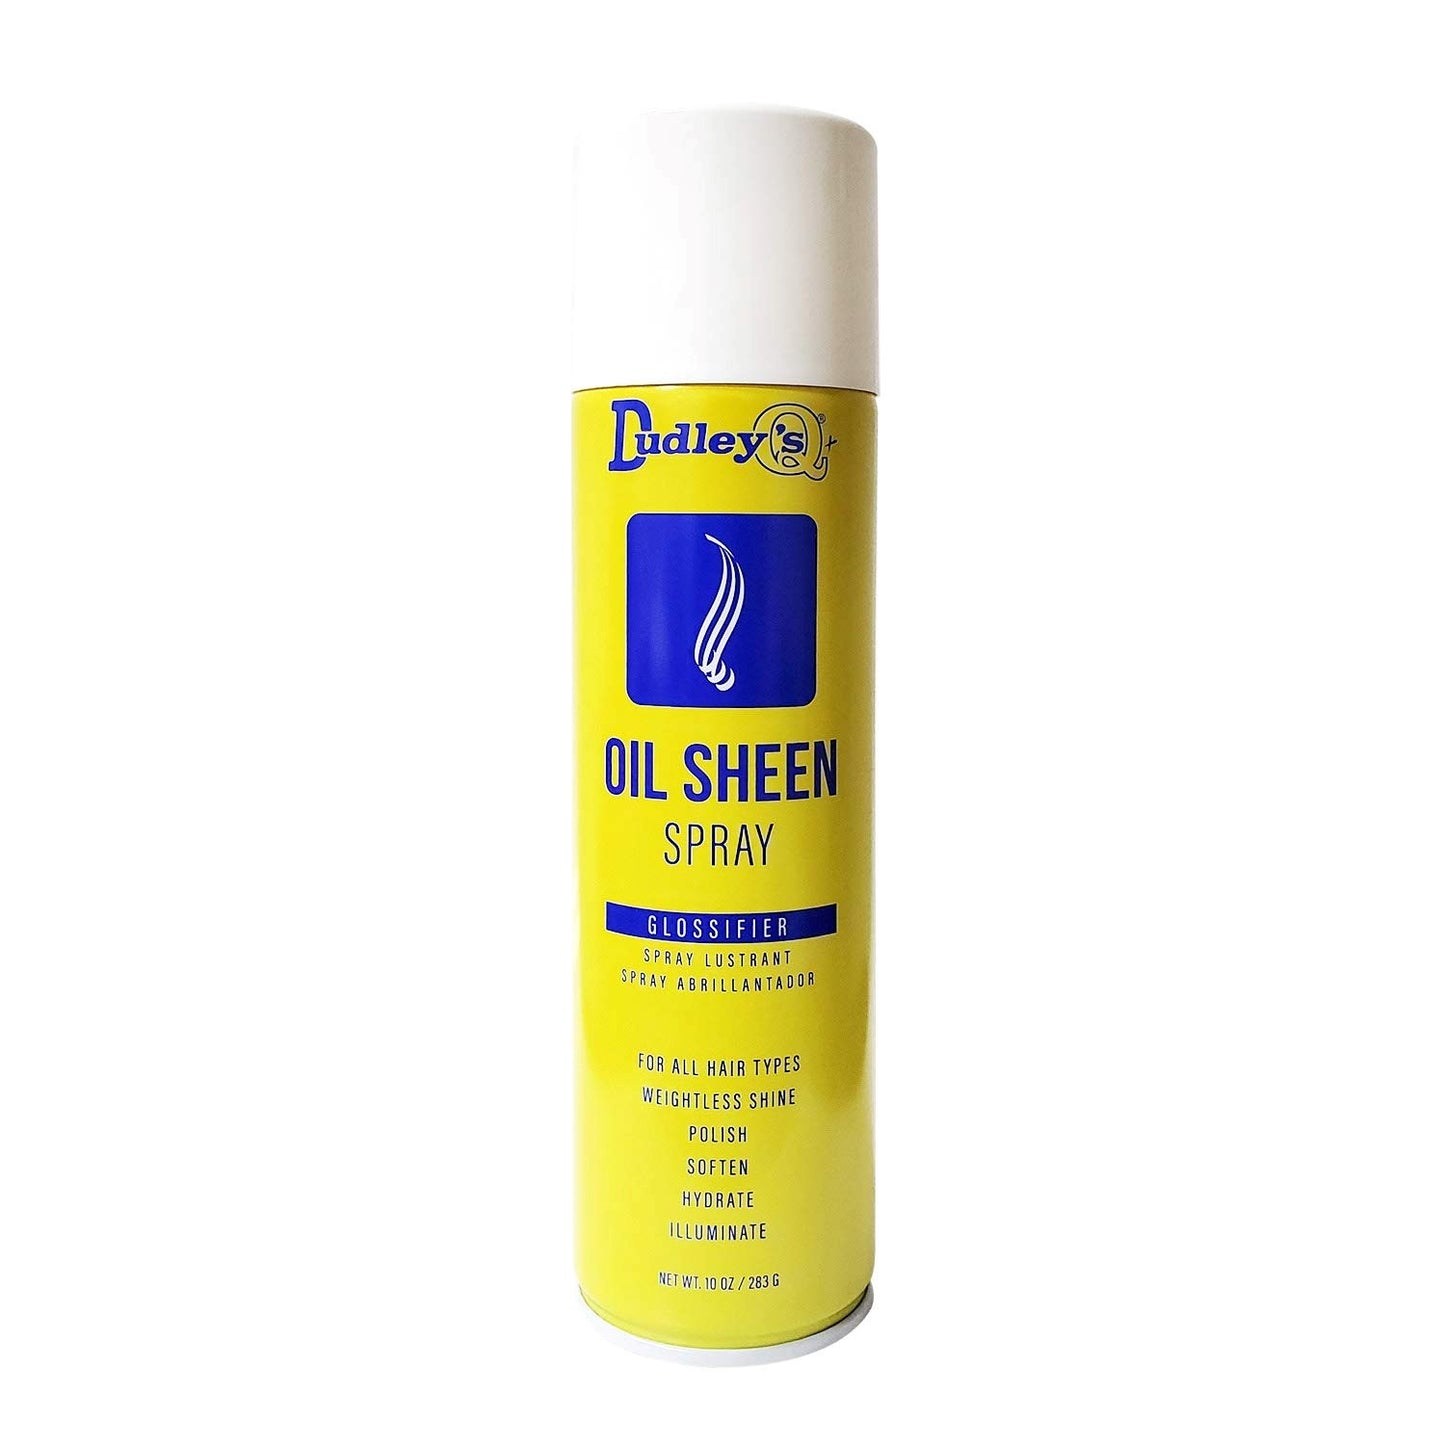 Dudley’s Oil Sheen Spray